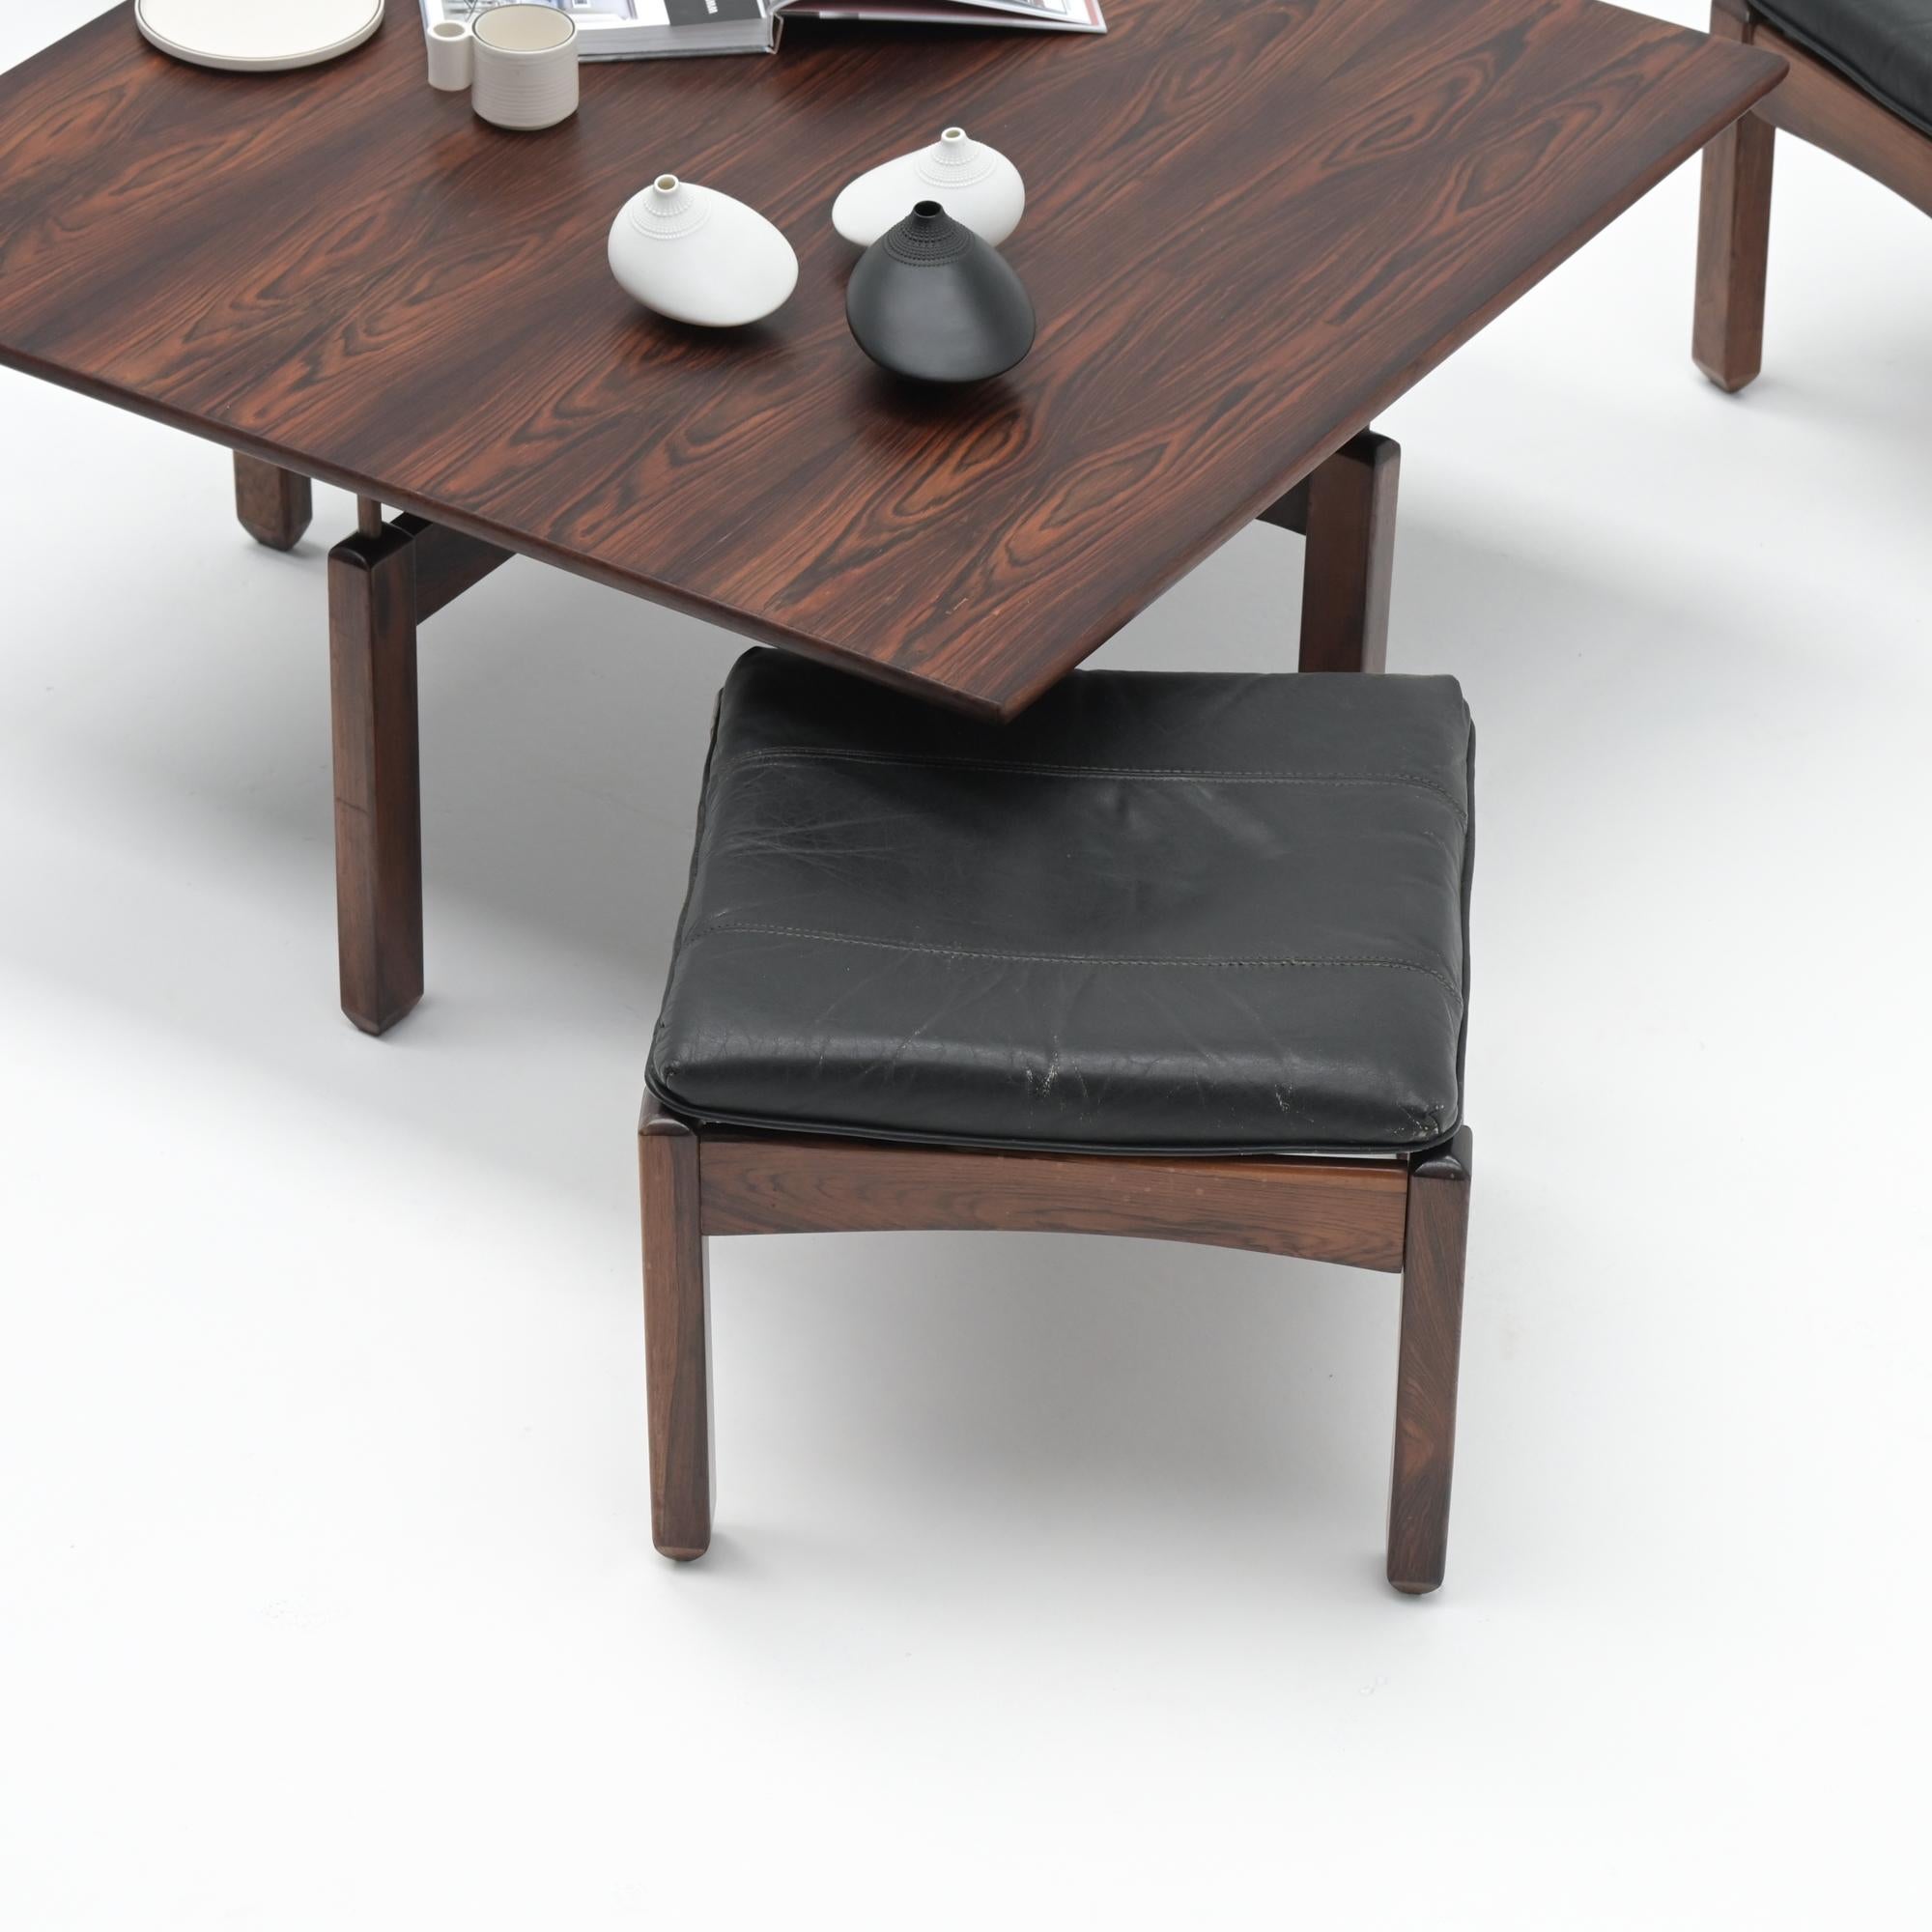 sheesham wood coffee table with stools